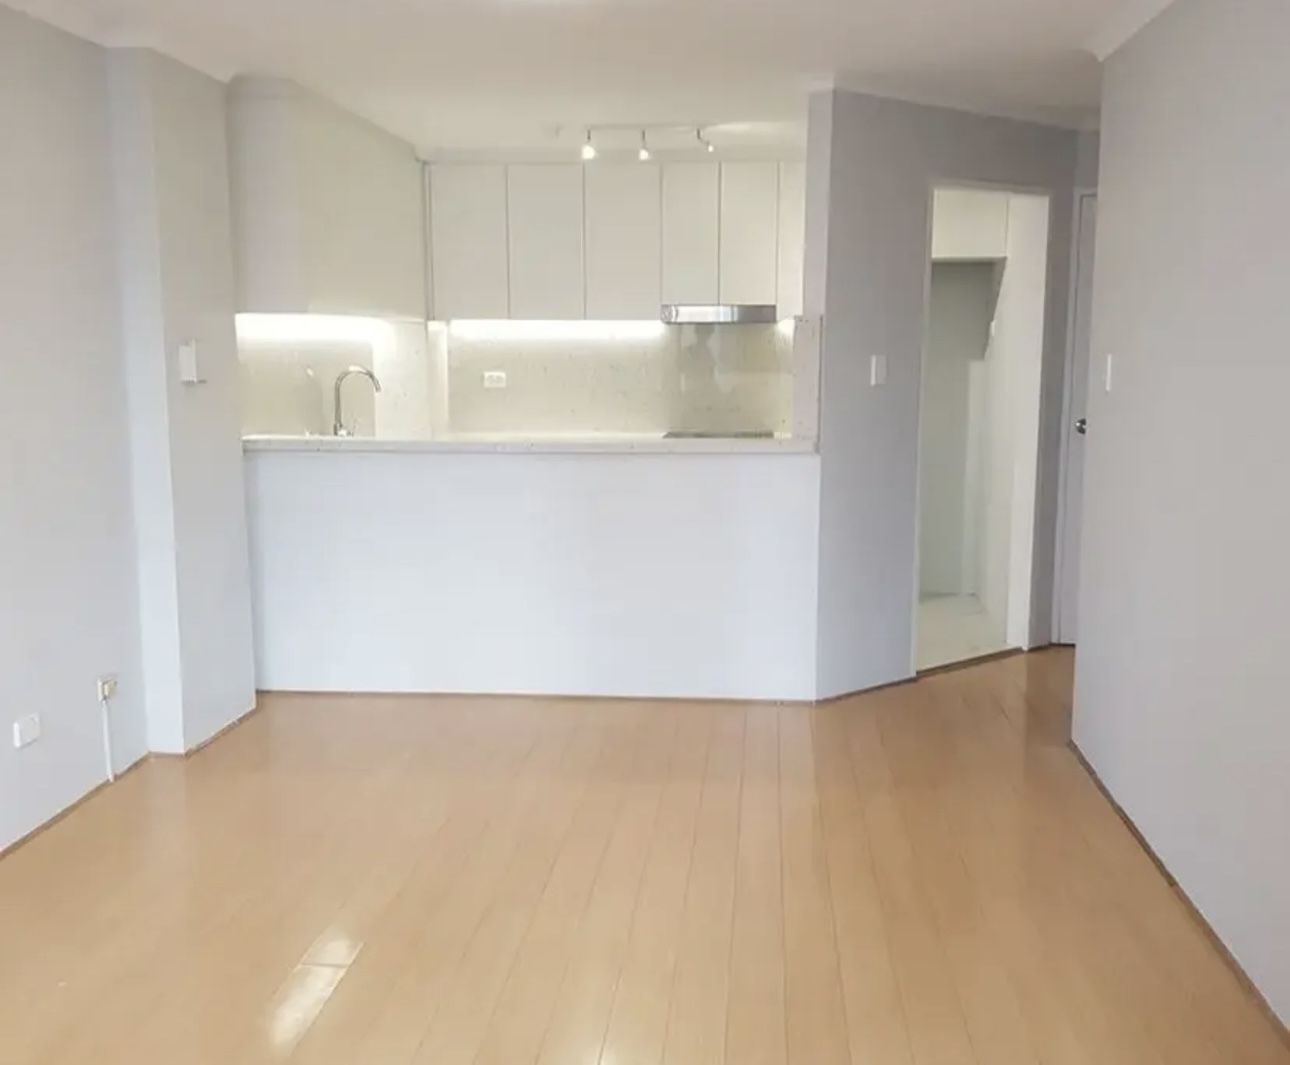 2 bedrooms Apartment / Unit / Flat in 47/336 Sussex Street SYDNEY NSW, 2000